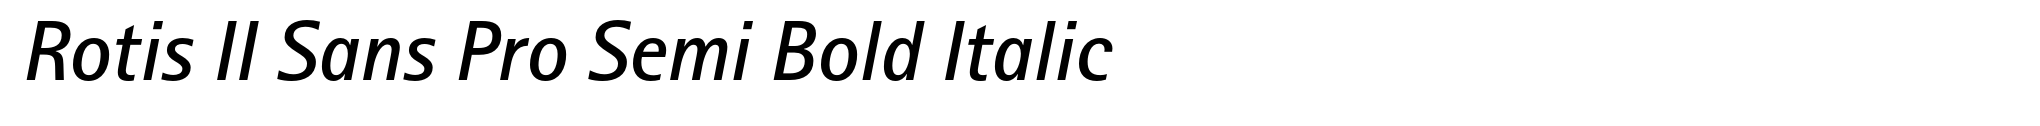 Rotis II Sans Pro Semi Bold Italic image